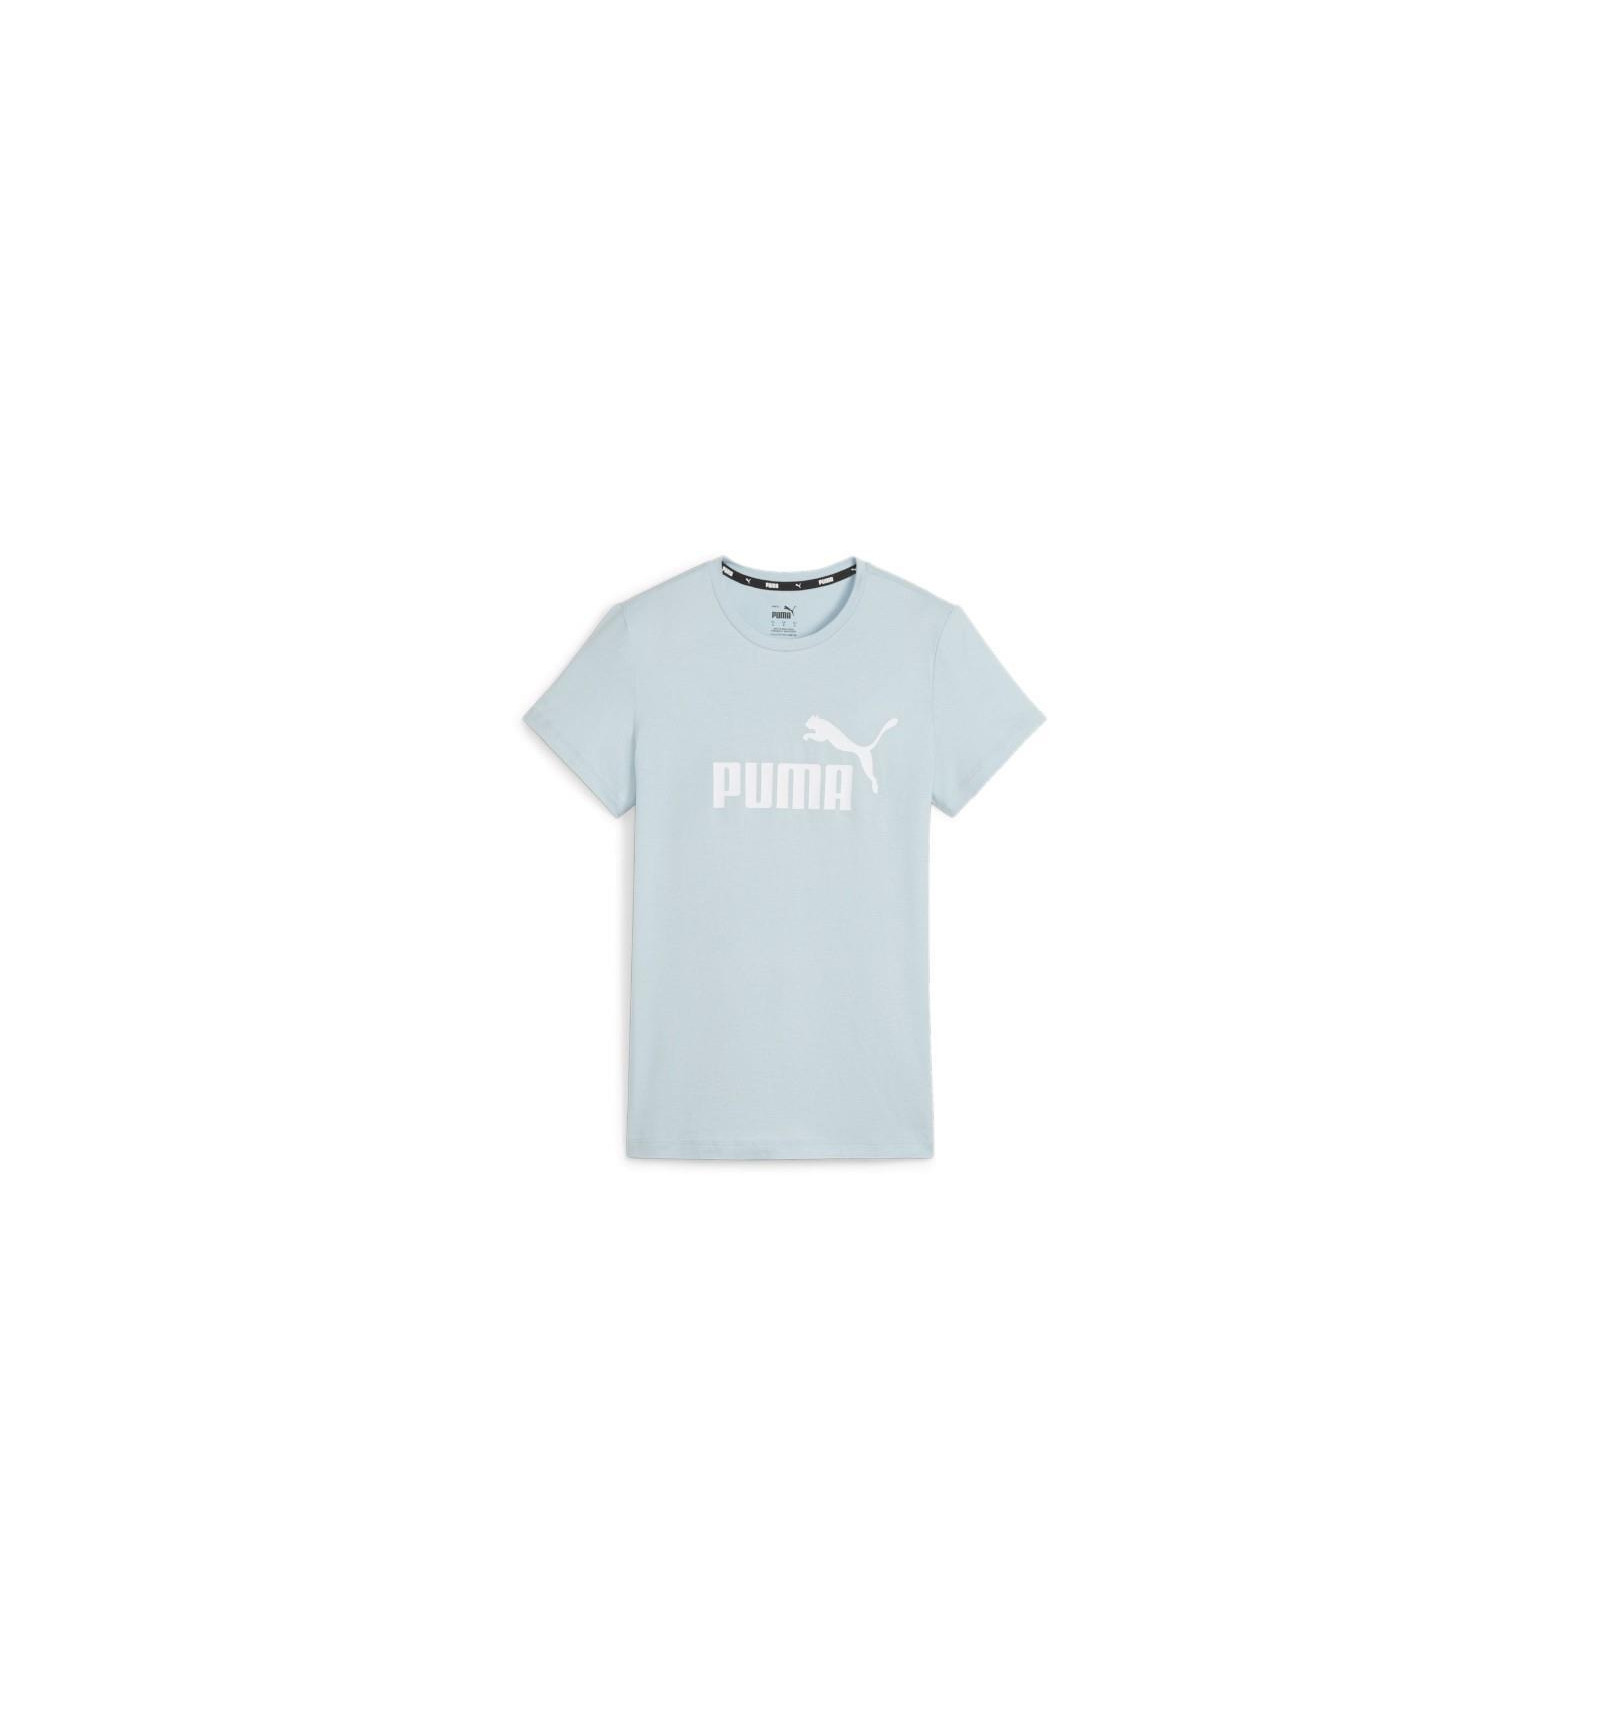 Camiseta Puma Mujer